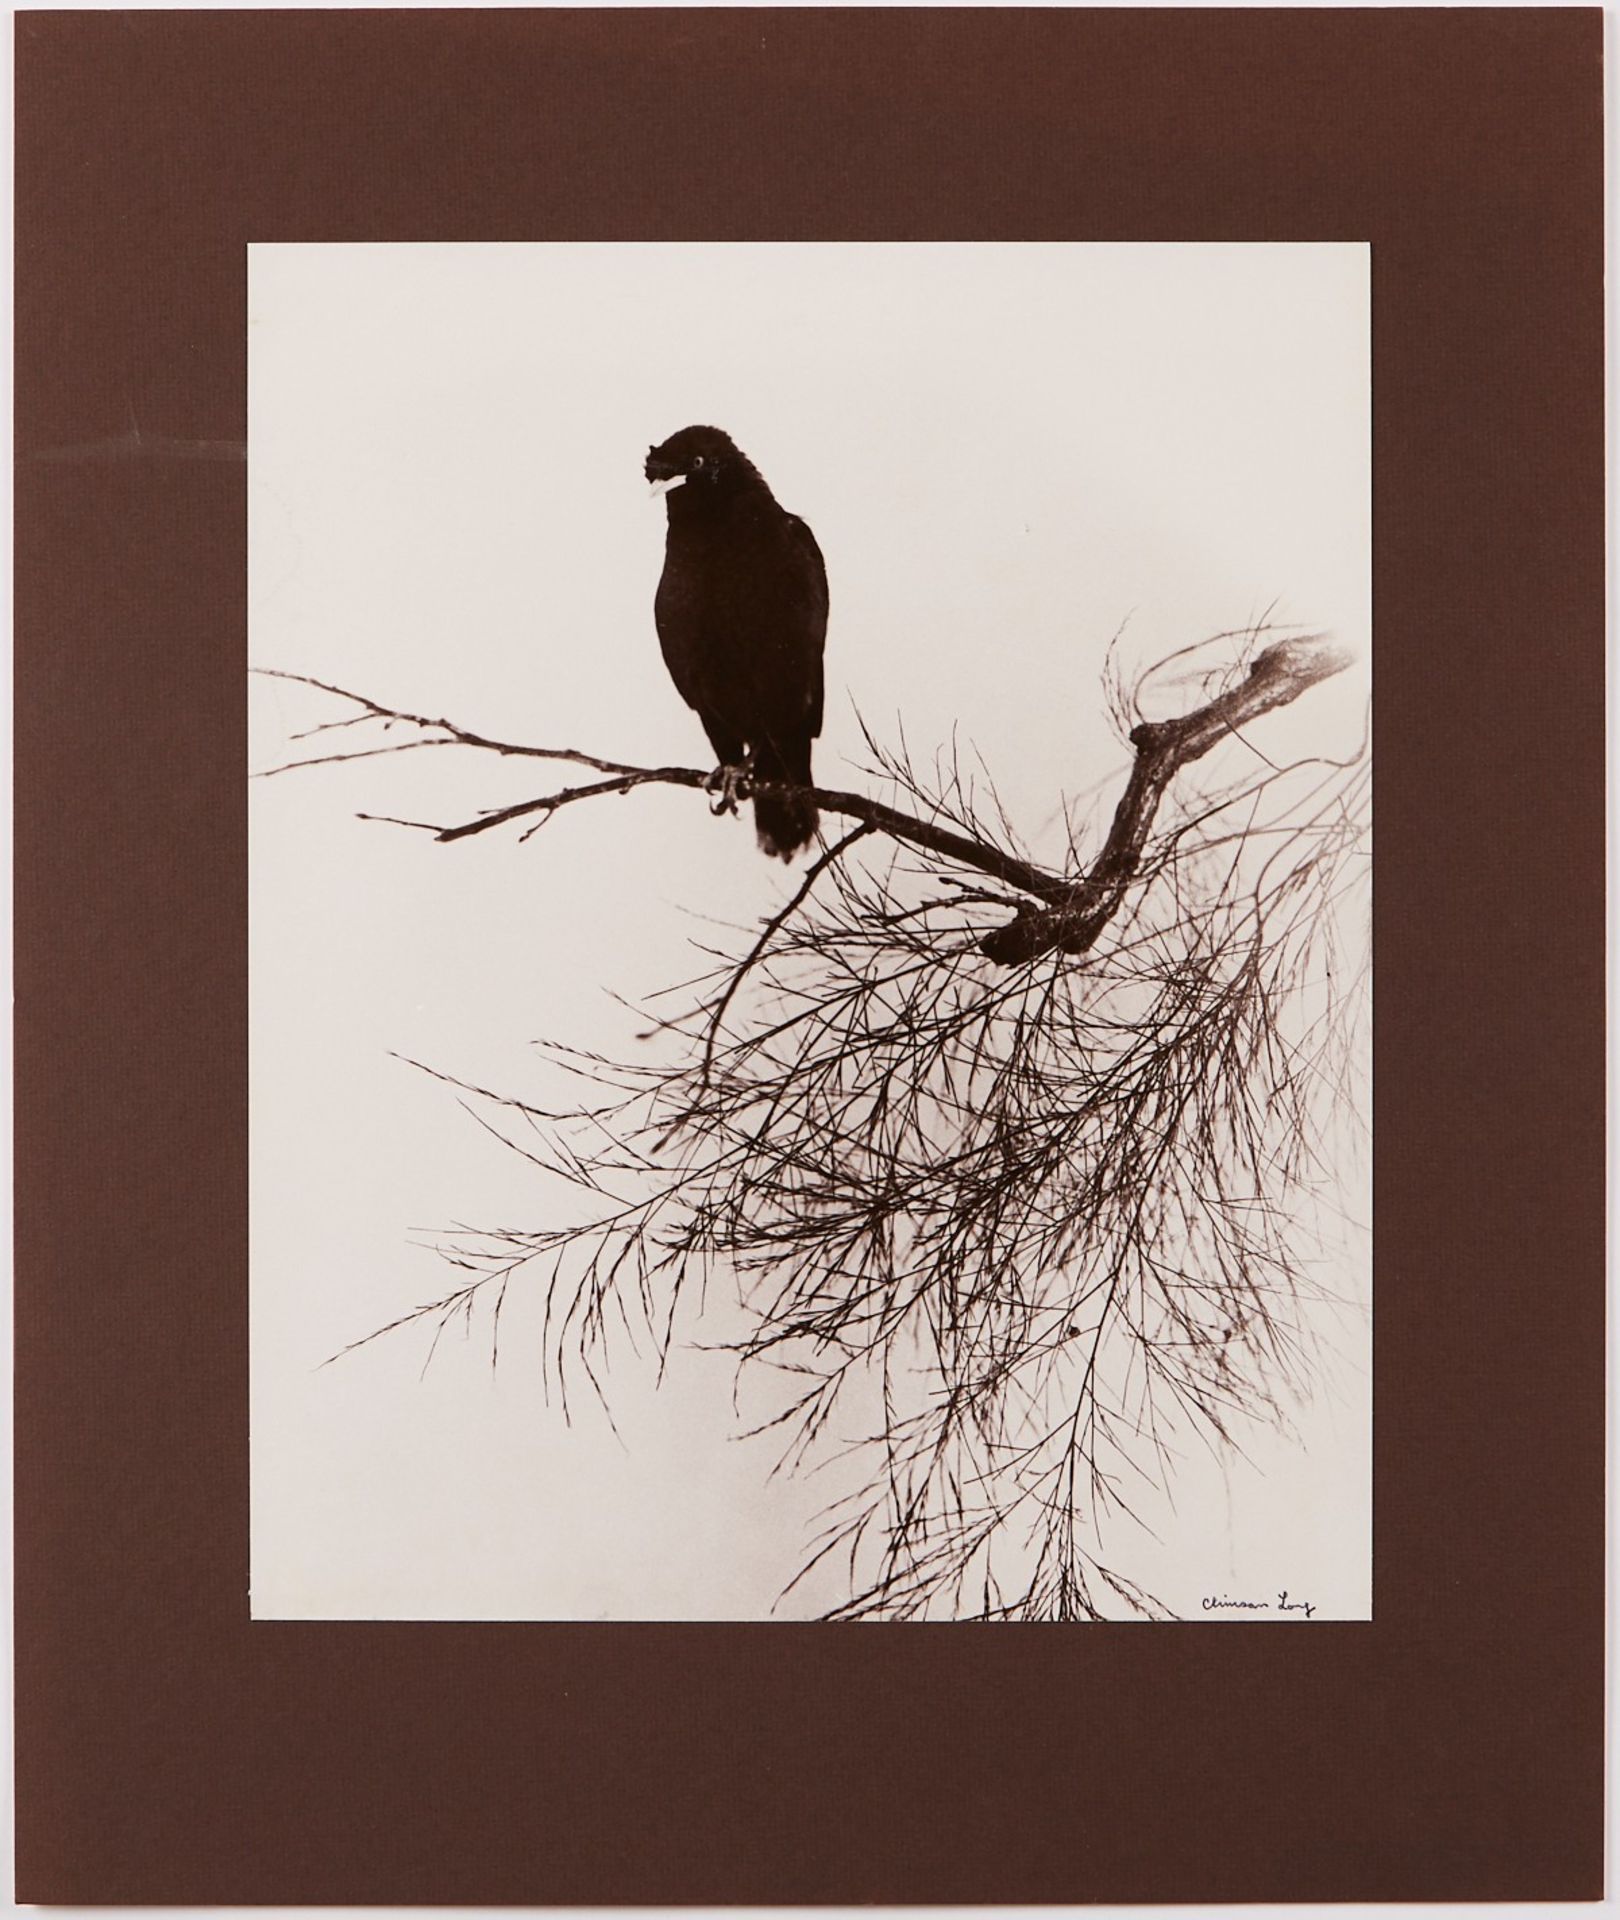 Chin San Long Photograph - Bird on Branch - Bild 2 aus 3